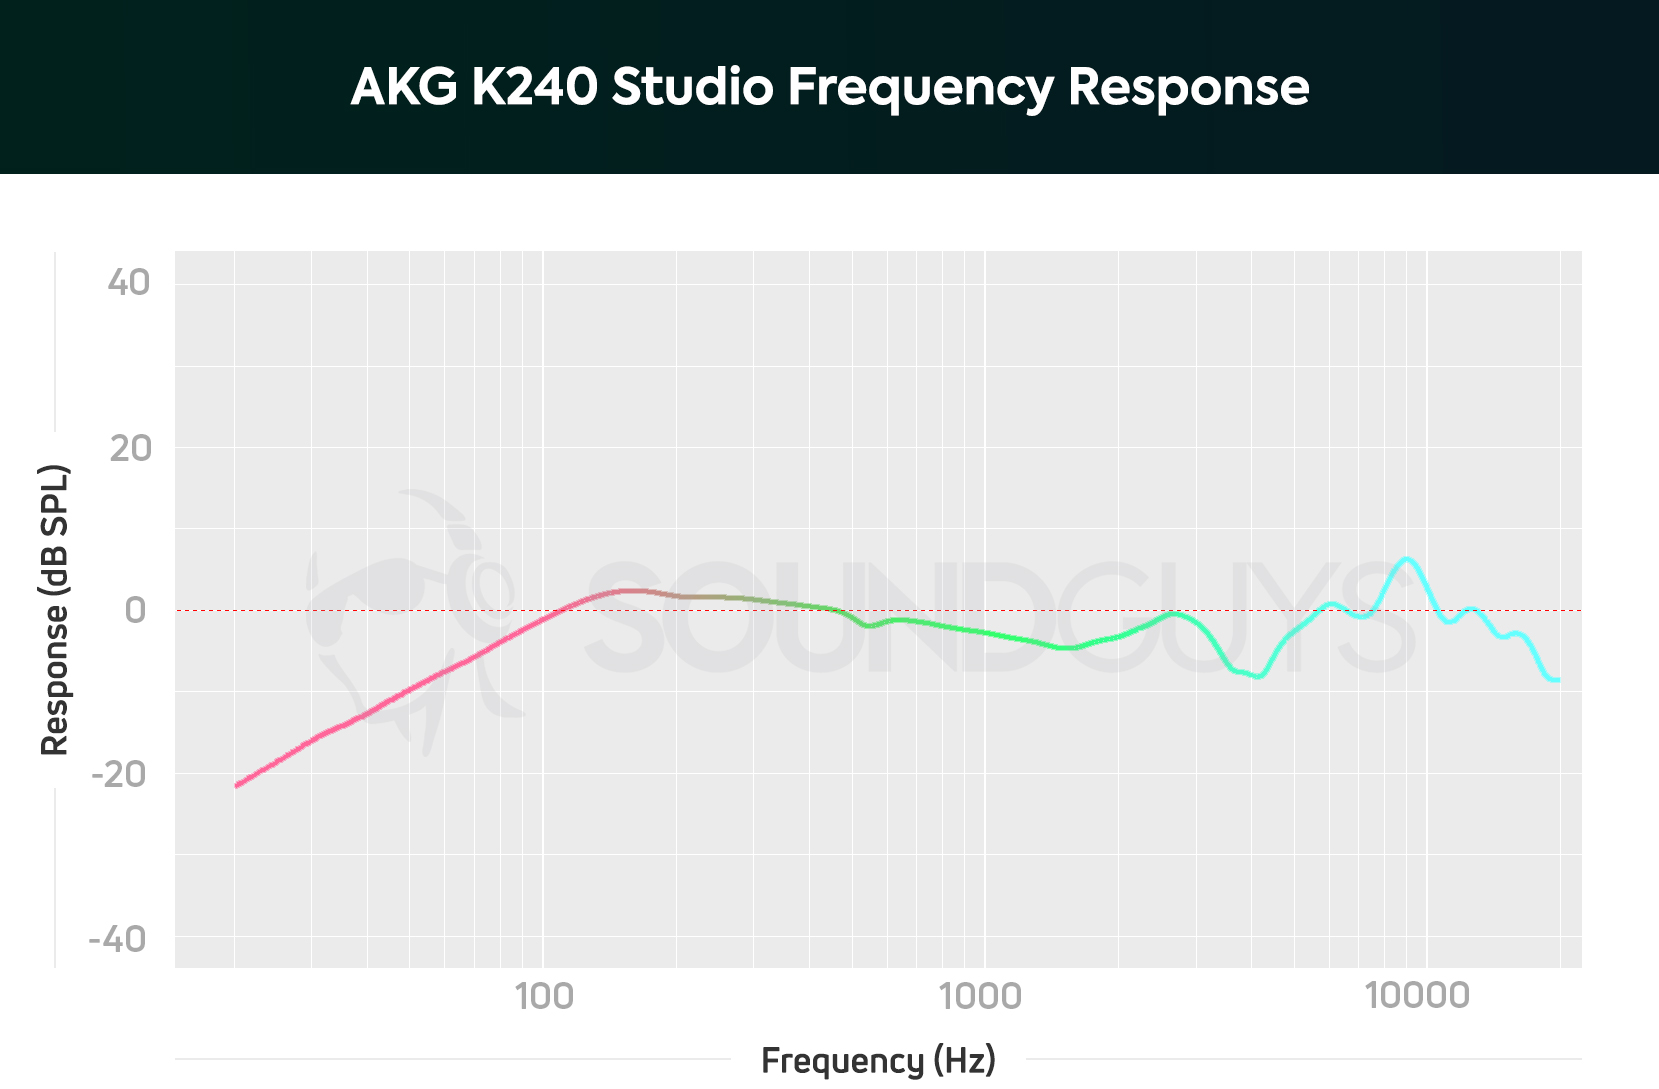 Tutustu 32+ imagen akg k240 studio frequency response